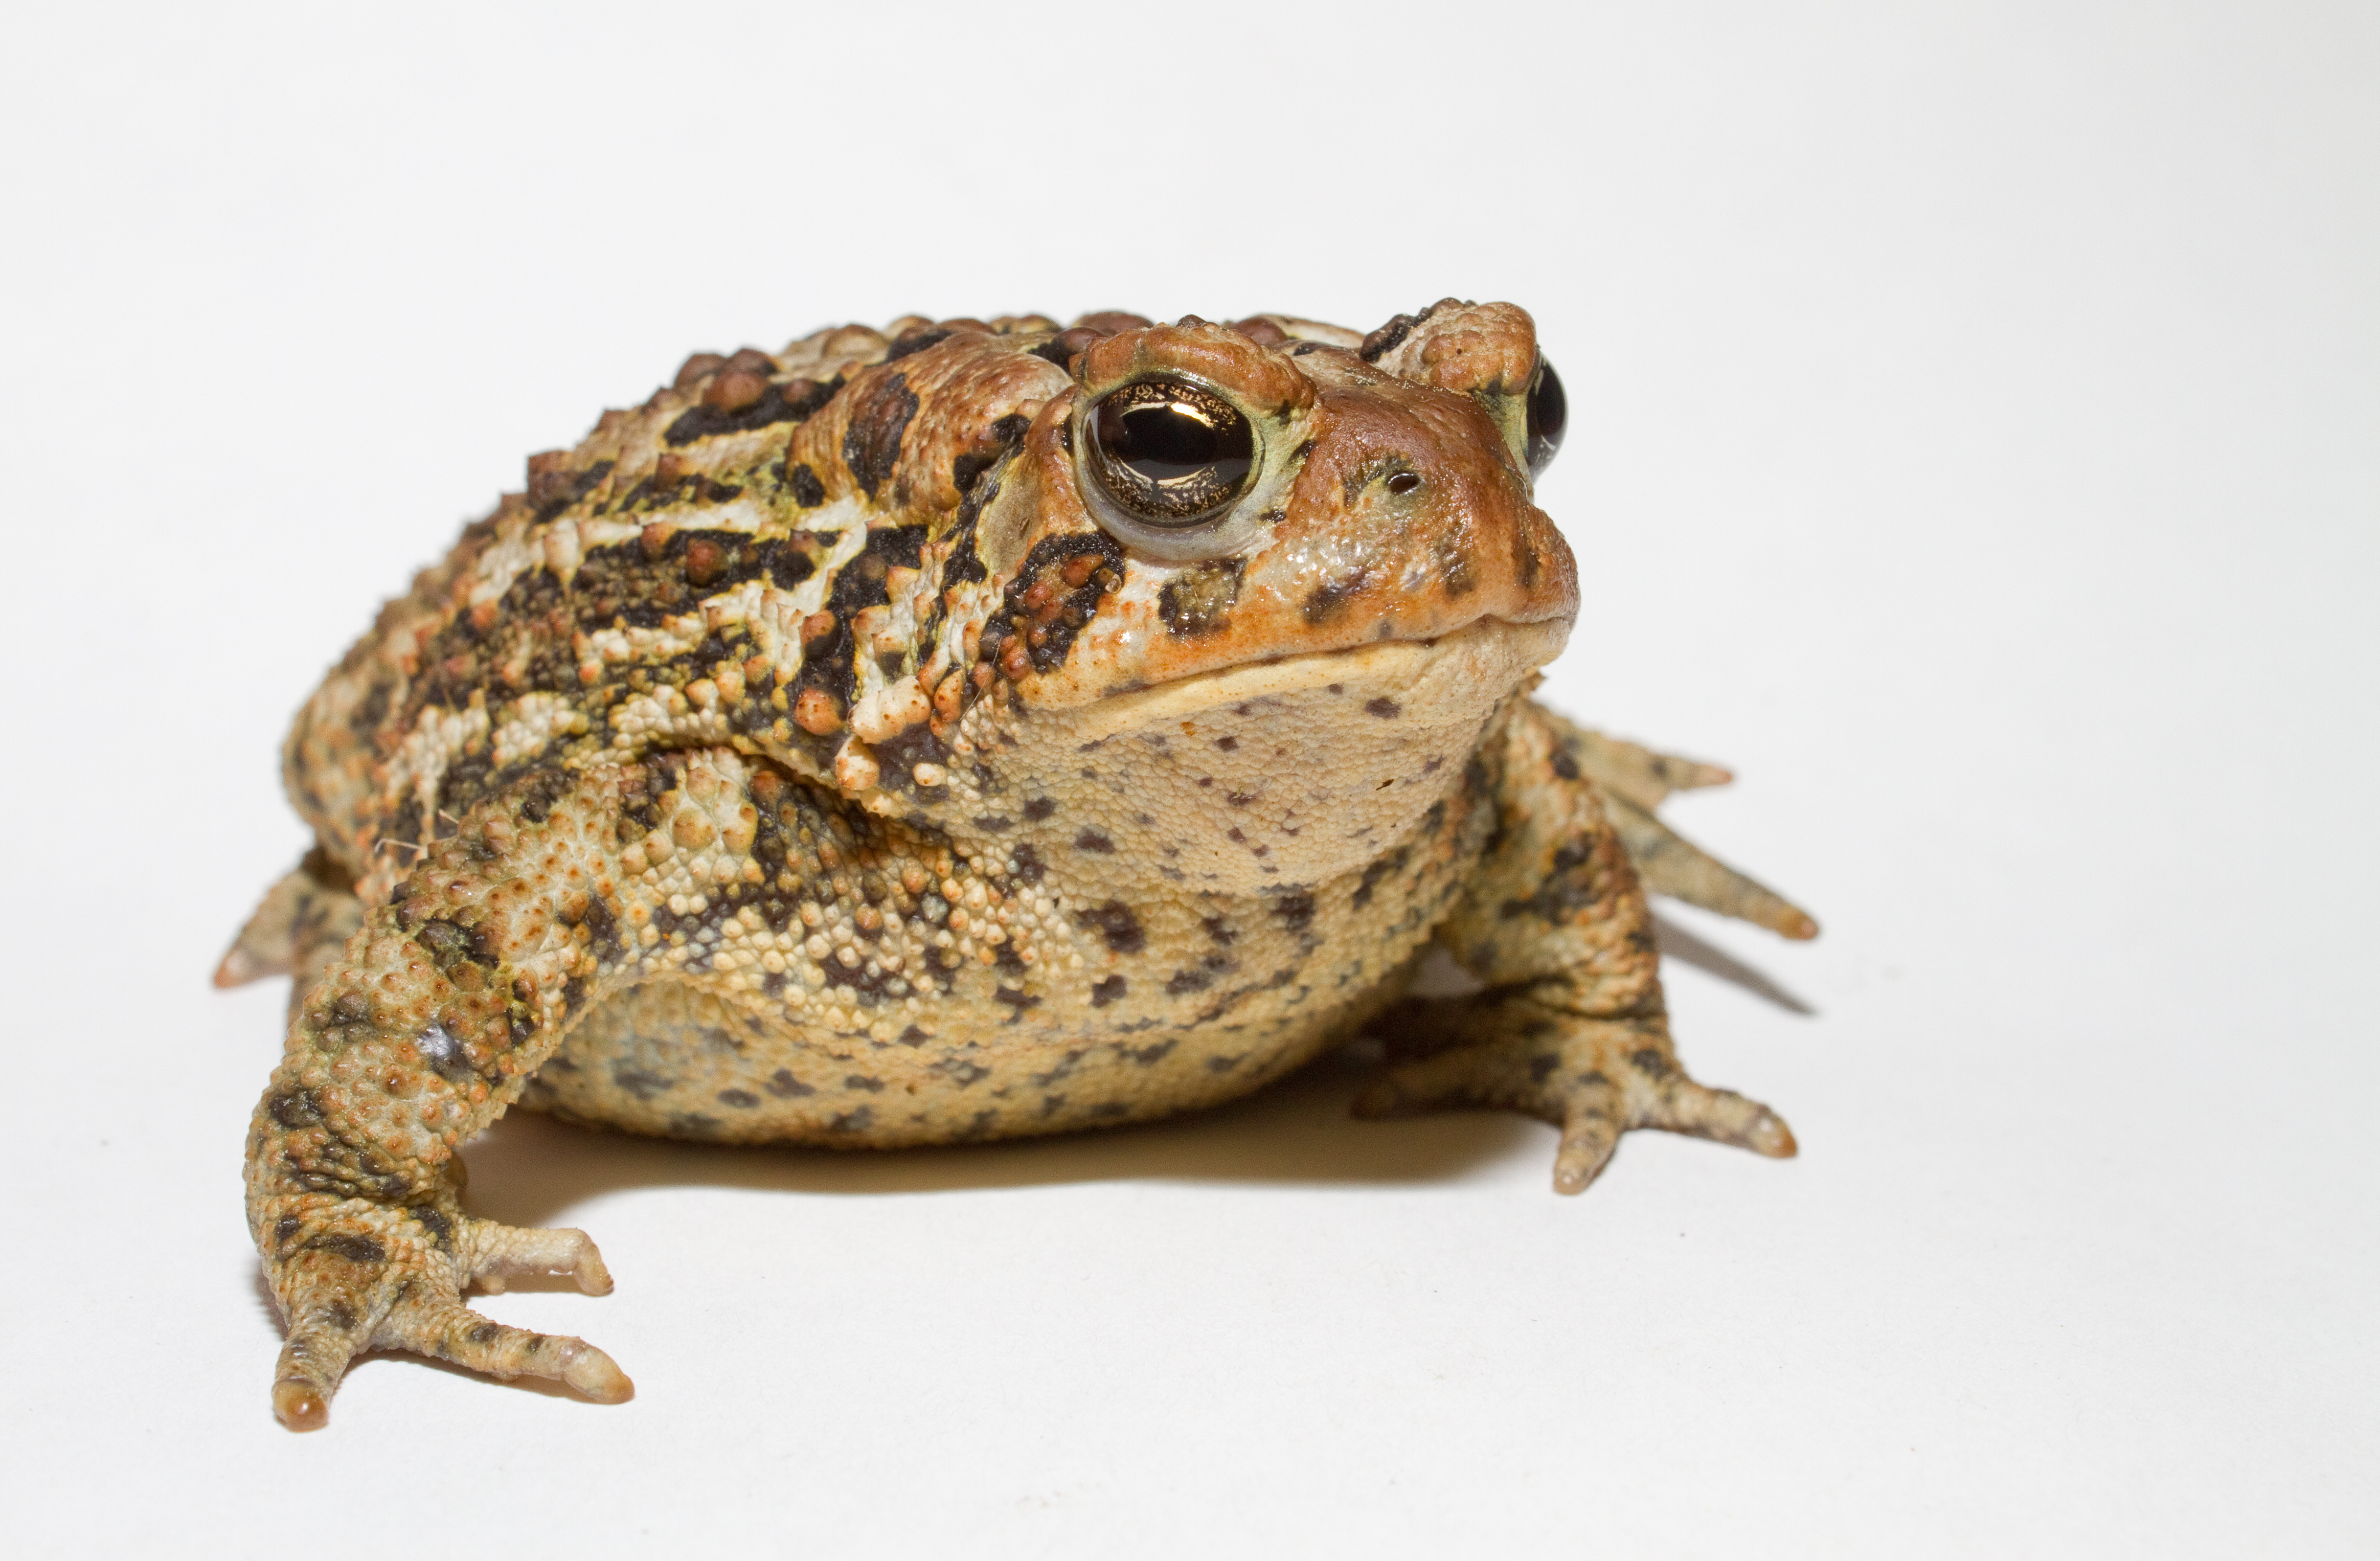 File:Anaxyrus americanus - American toad.jpg - Wikimedia Commons